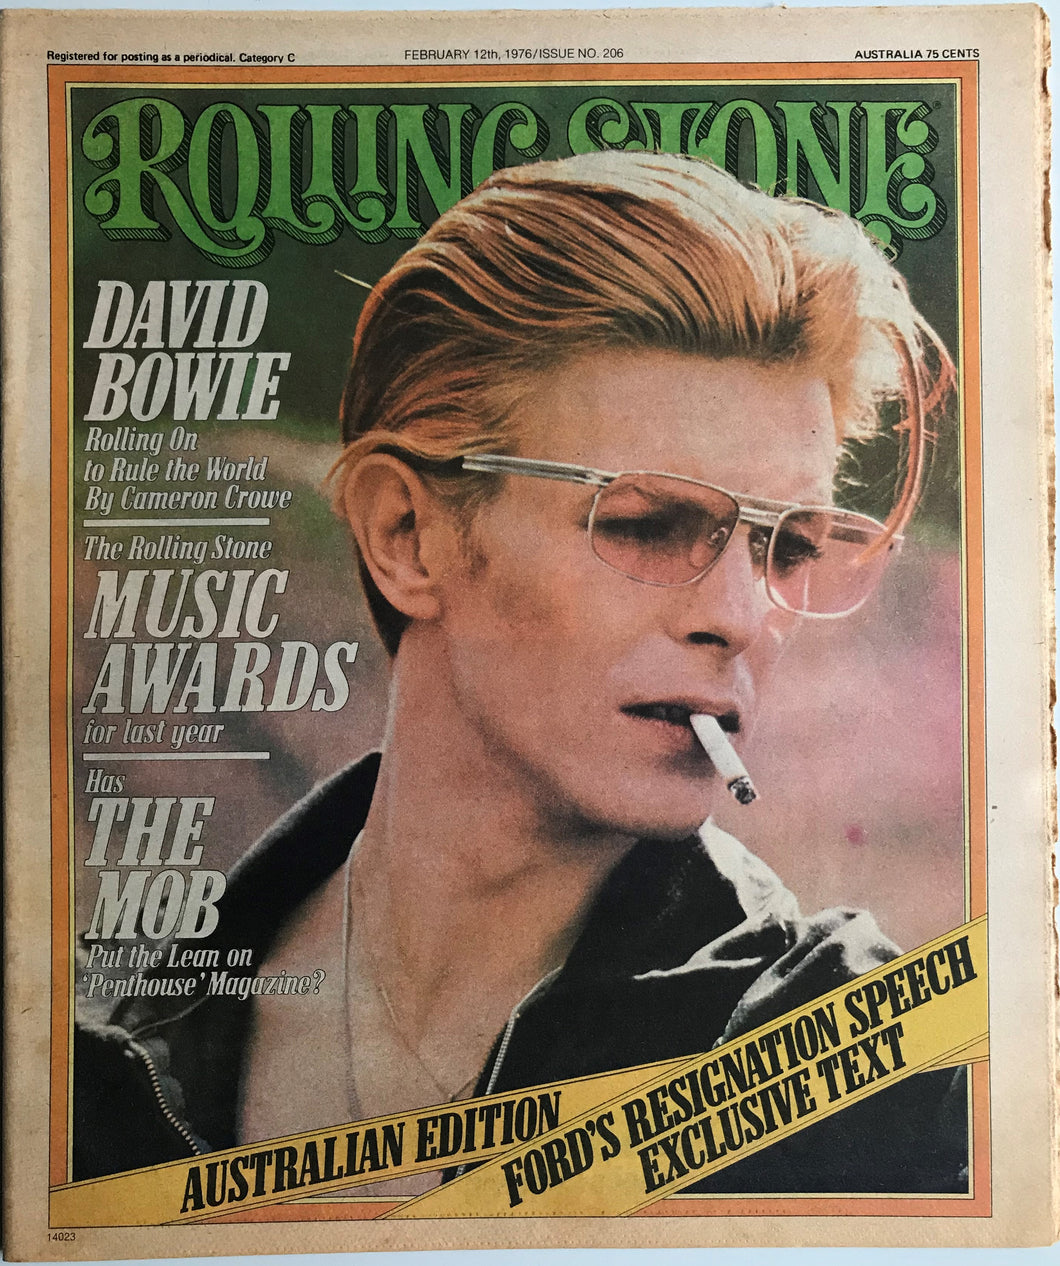 David Bowie - Rolling Stone No. 206